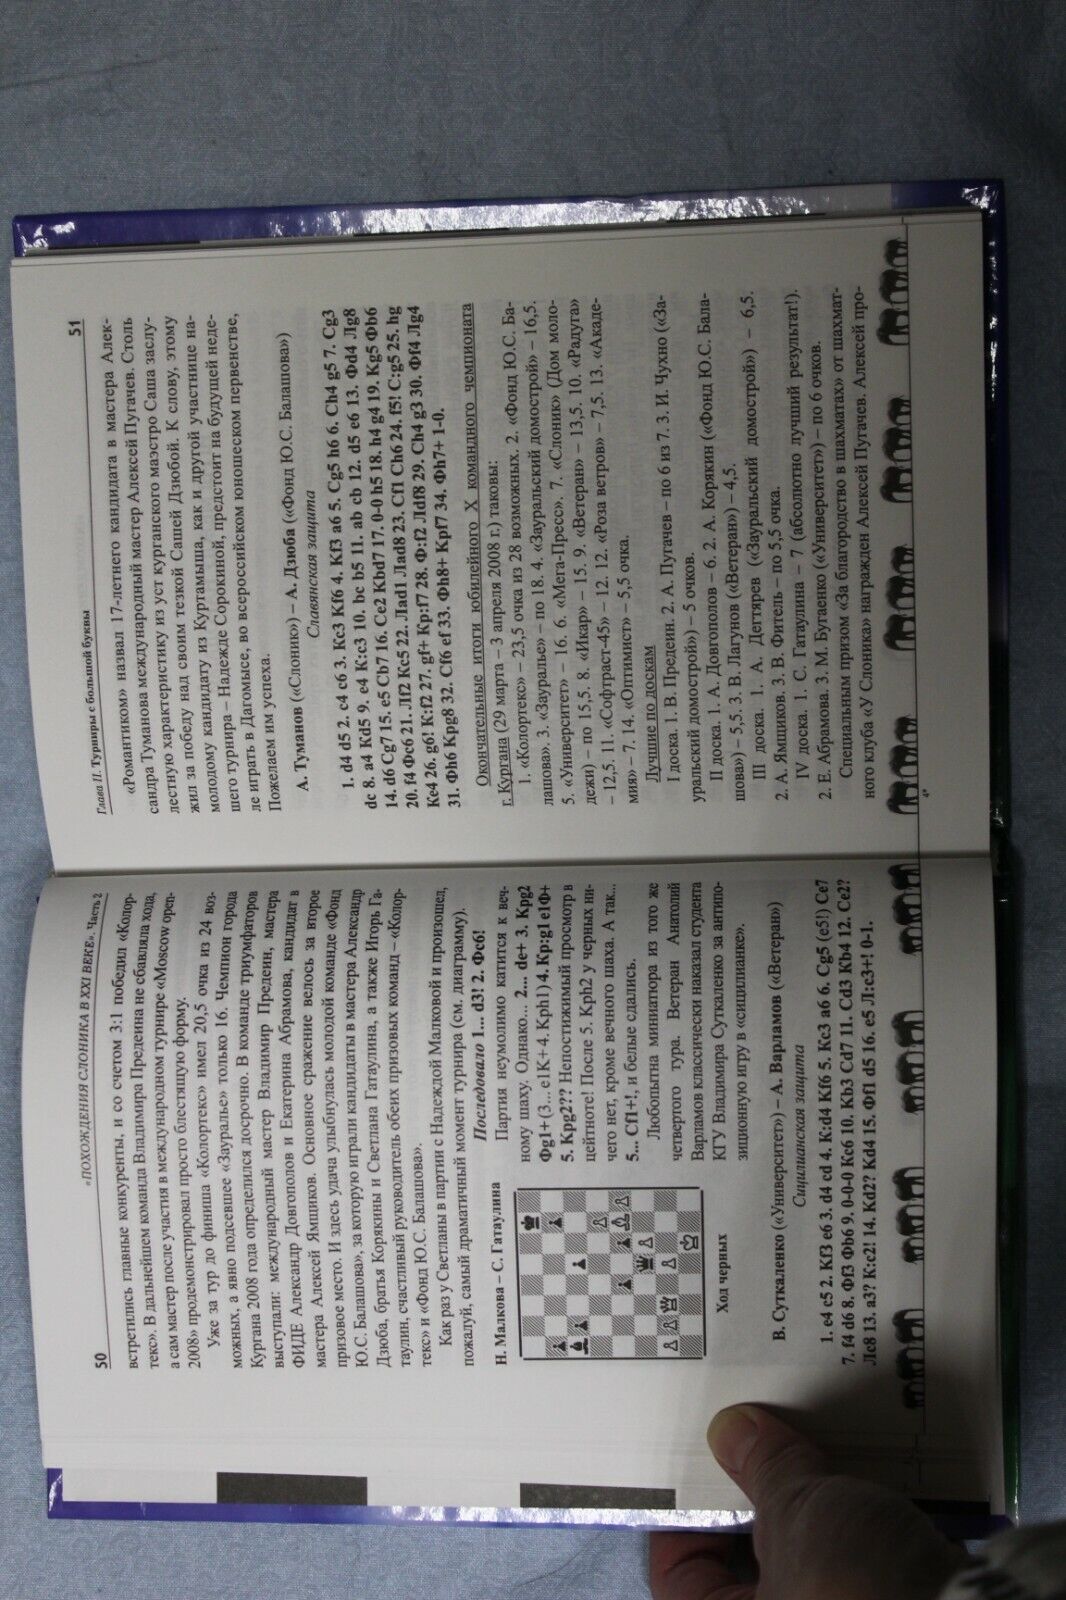 11046.Chess Book: Adventures of Elephant in 21 century, 2 Volumes 500&200 copies, 2008